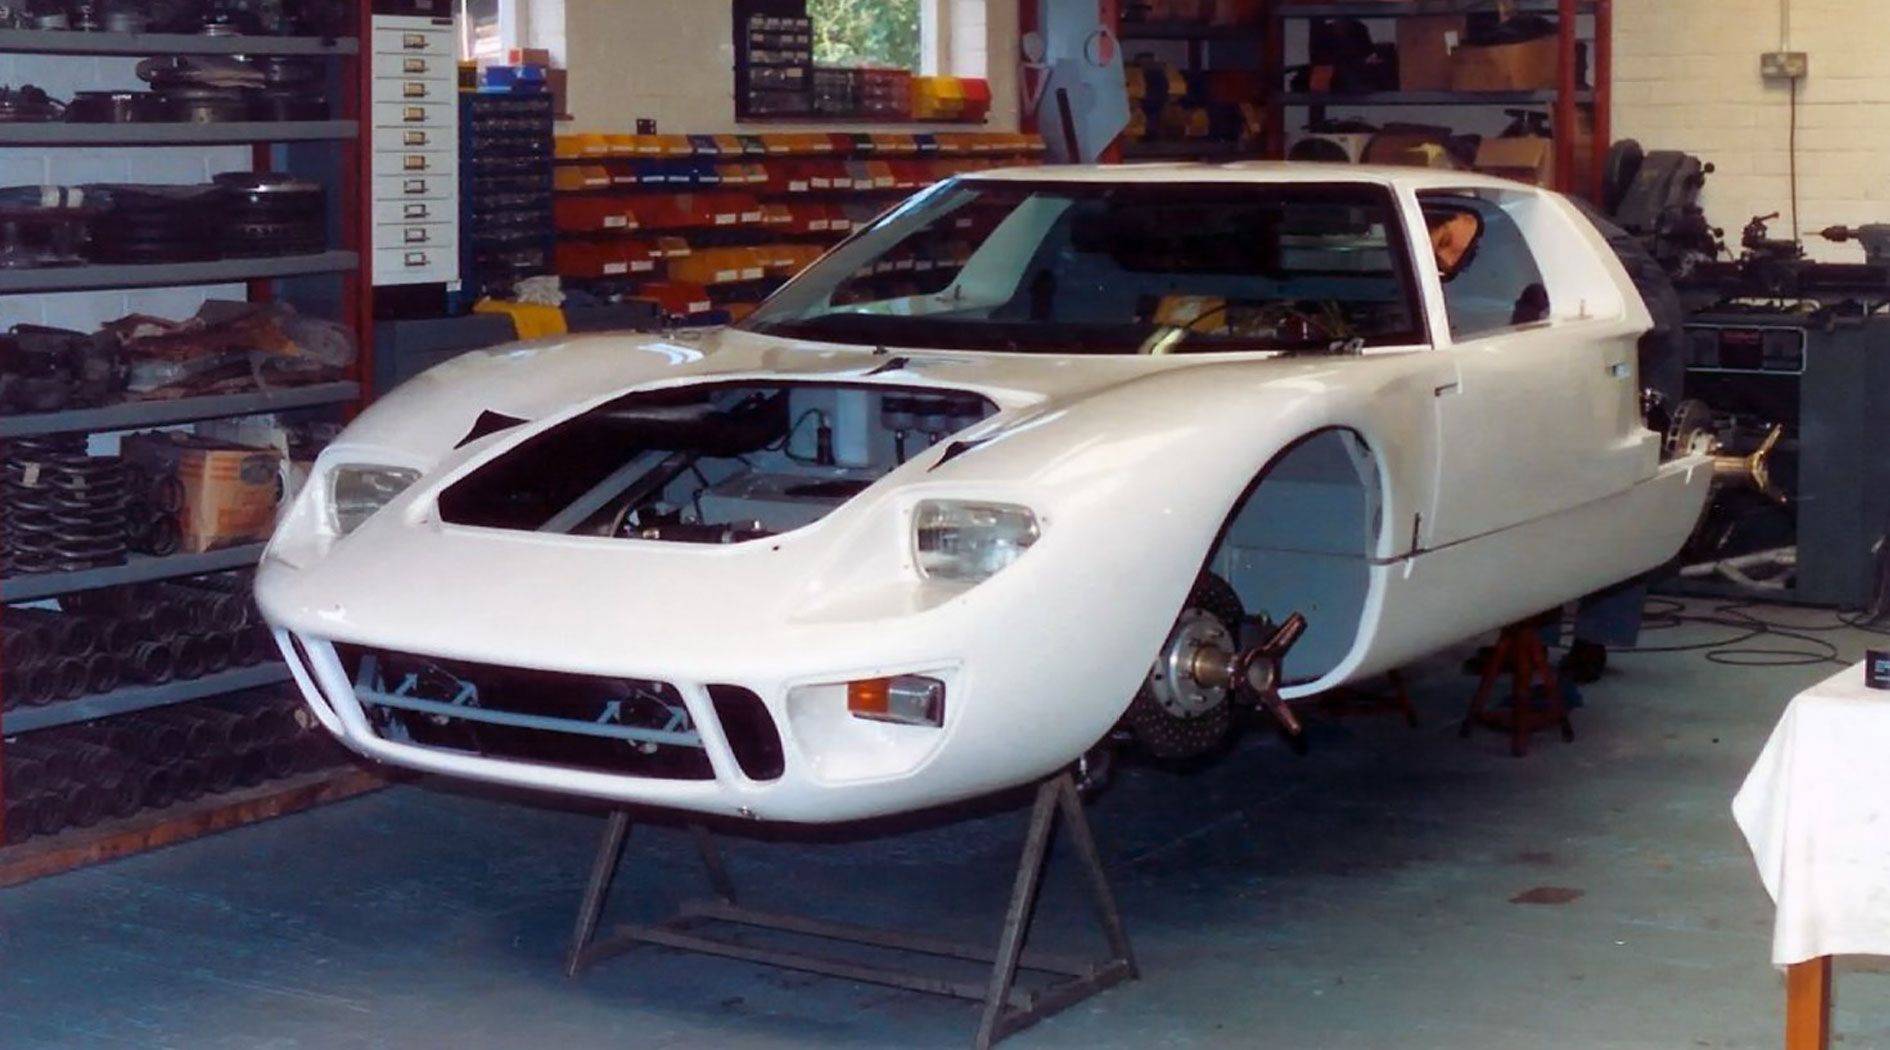 GT40 Mark V chassis 1120